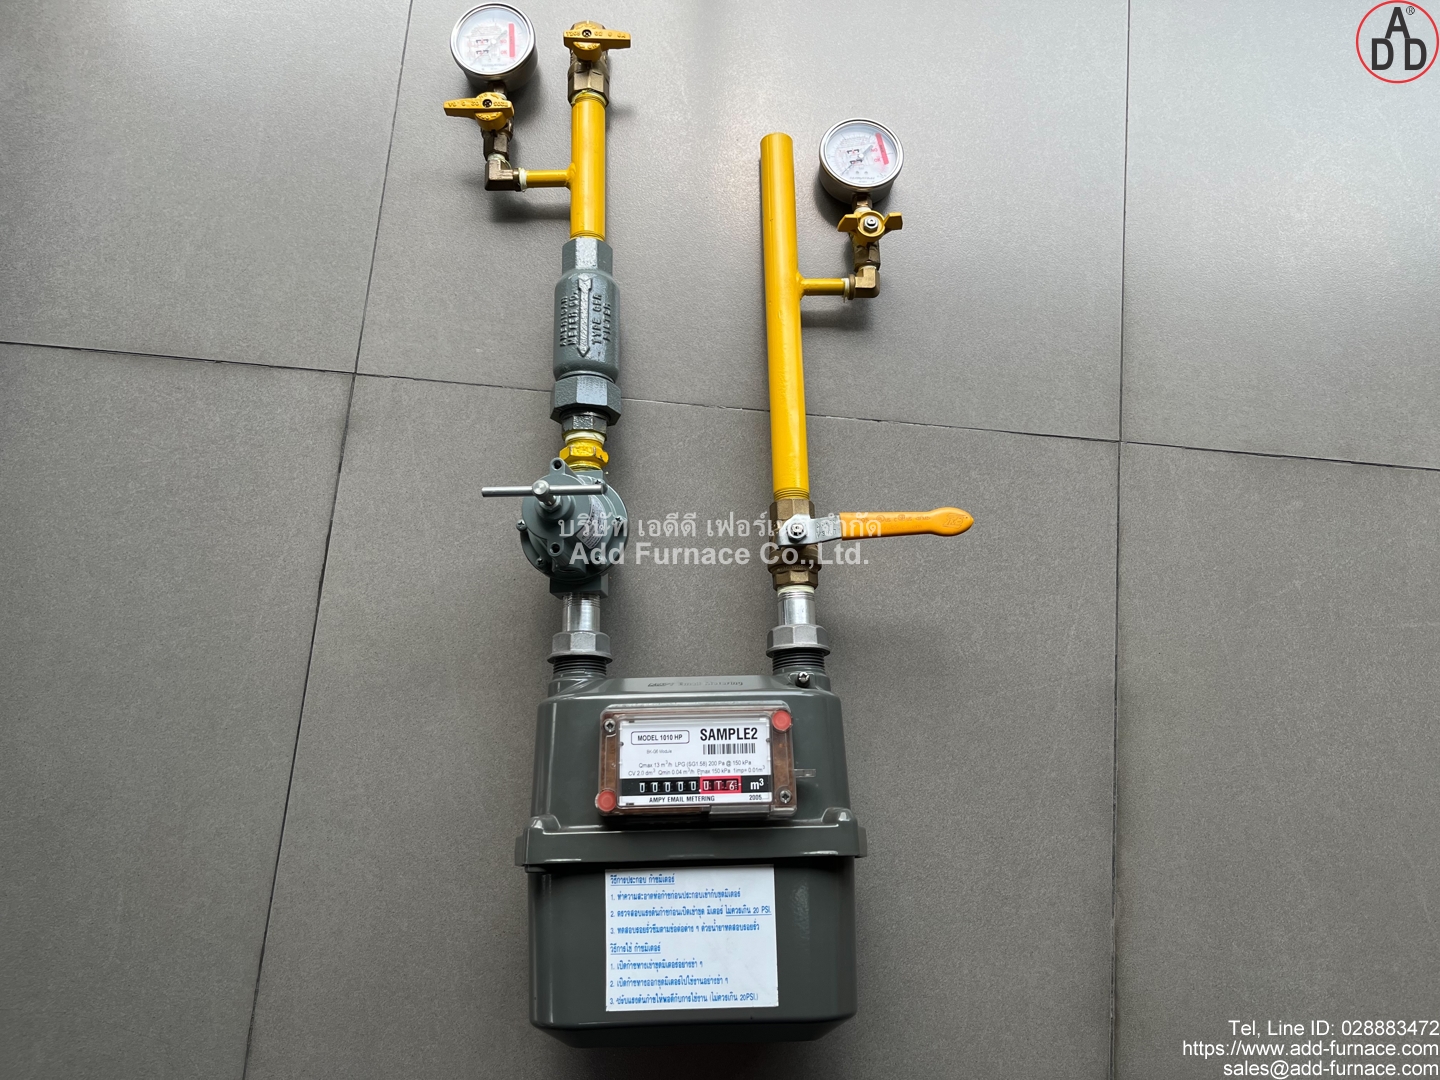 gas-meter-750hp-1010hp-standard-station-install (14)